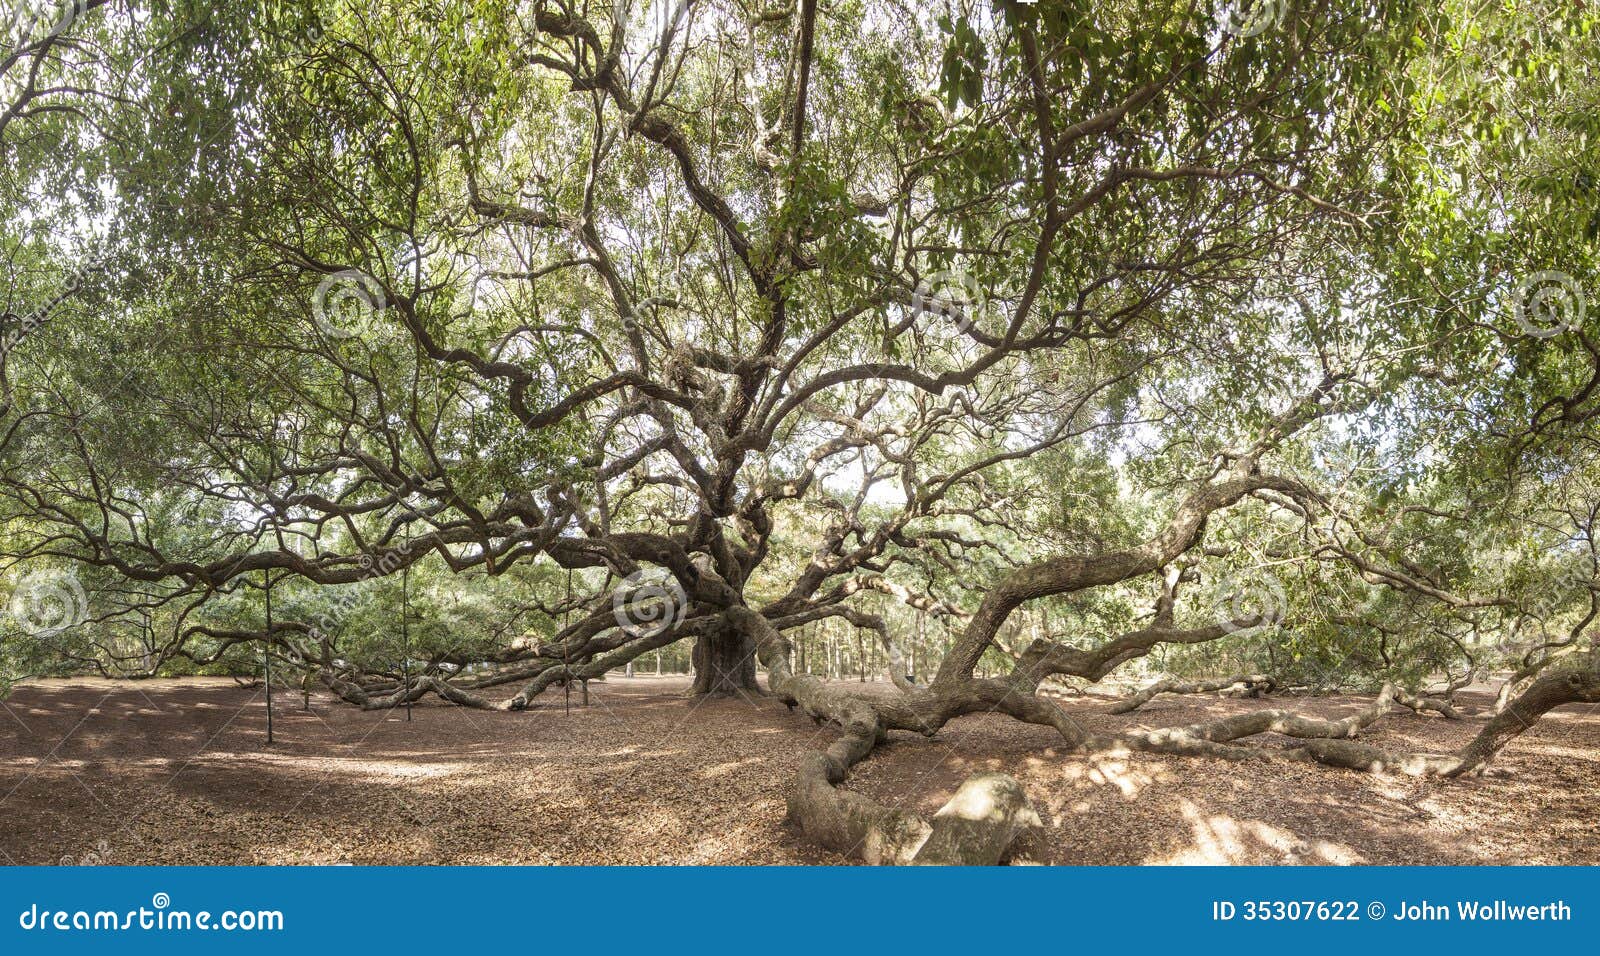 immense live oak tree